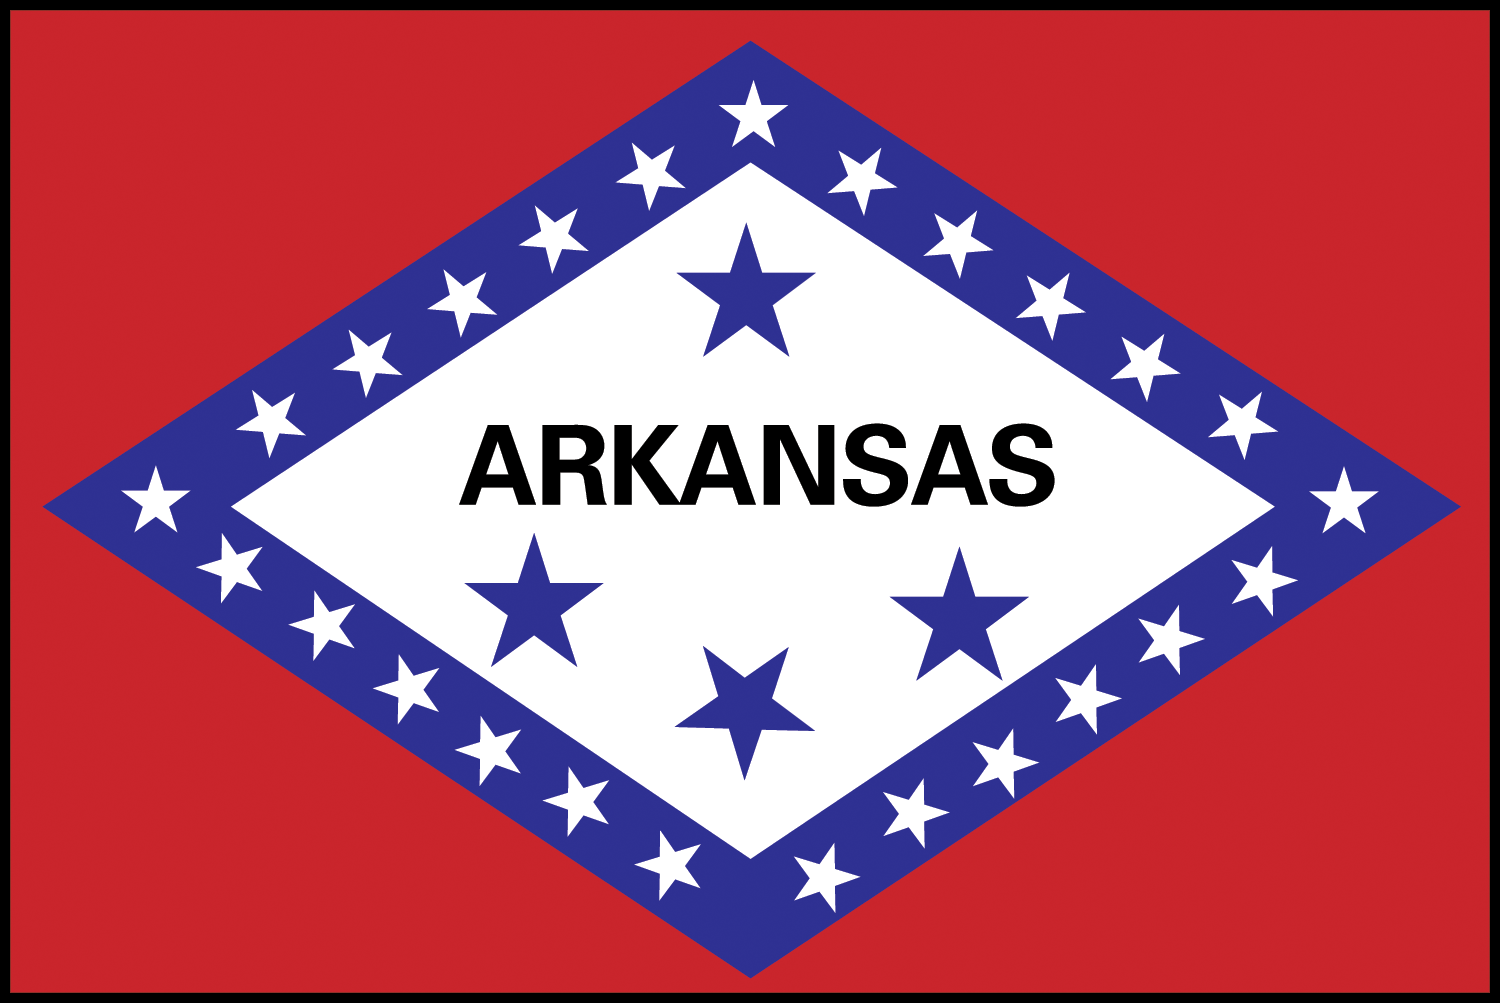 Arkansas Prayer of the Day - Today's Prayer of the Day focuses on the state of Arkansas. #Arkansas #PrayeroftheDay